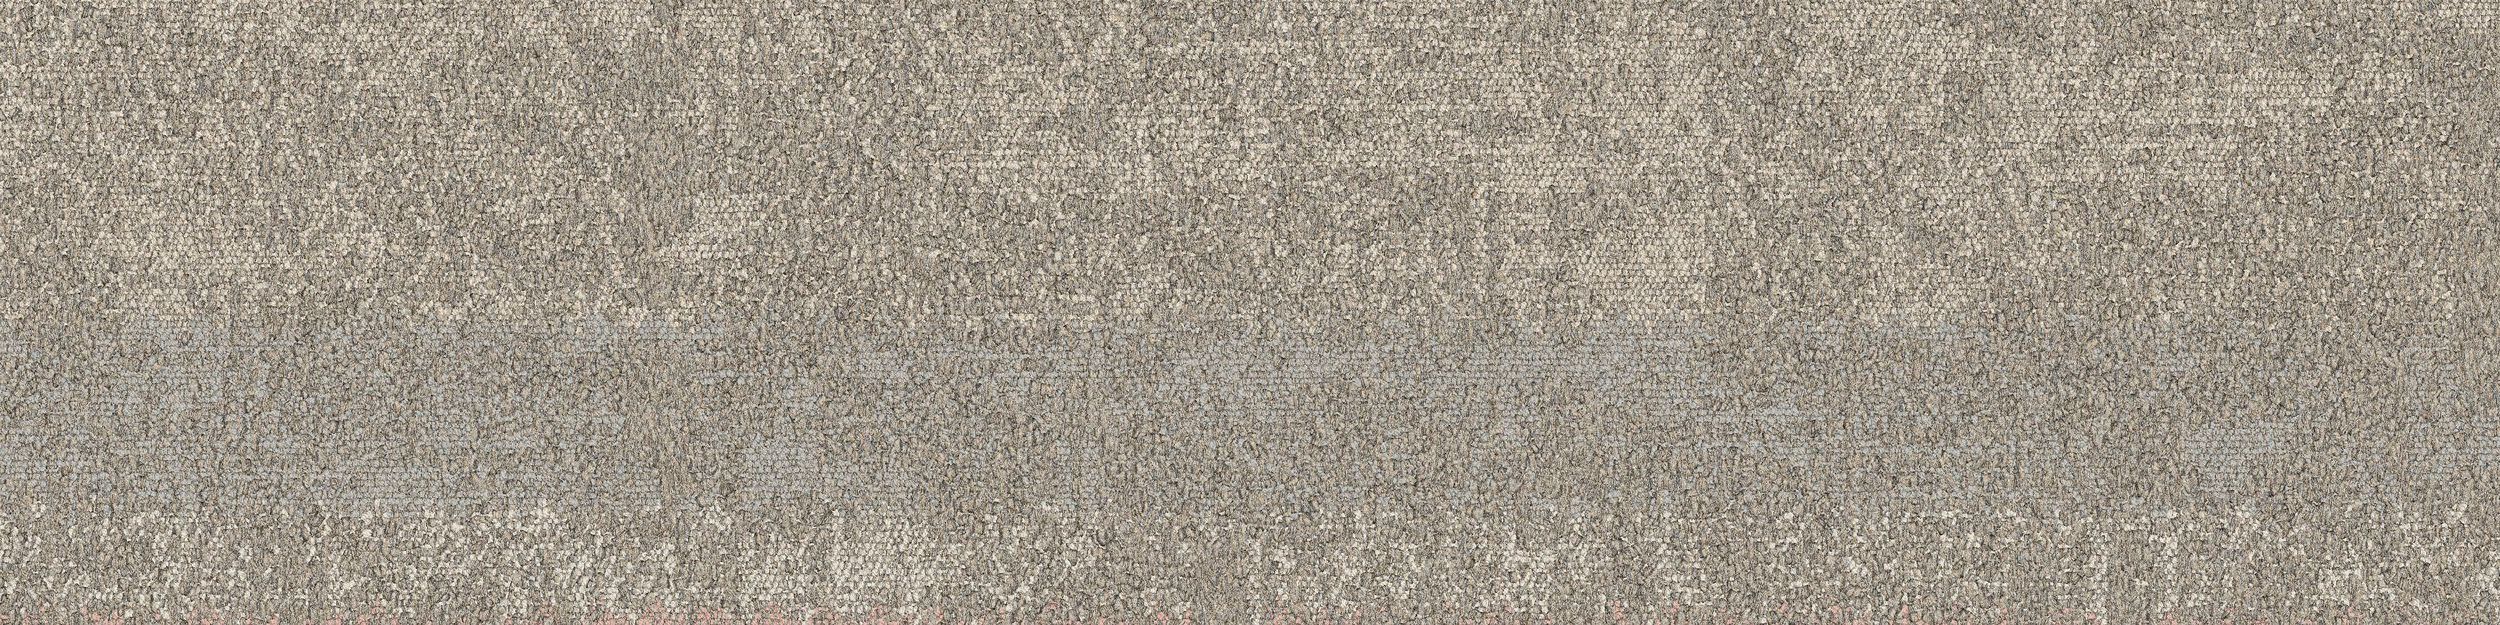 Up At Dawn Carpet Tile In Rhodium imagen número 2